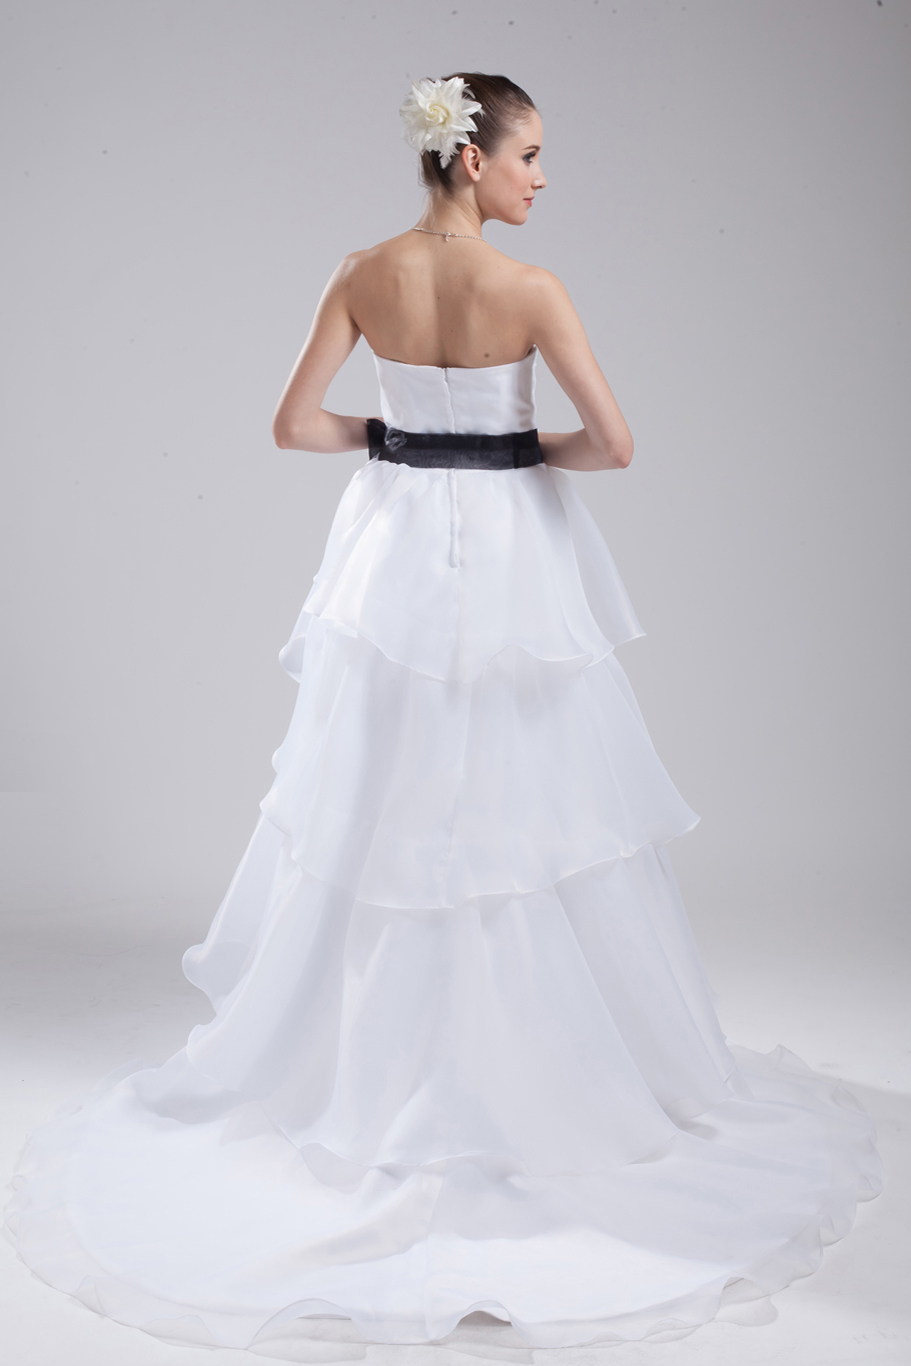 A-Line Sash Strapless Court Train Cheap Wedding Dress